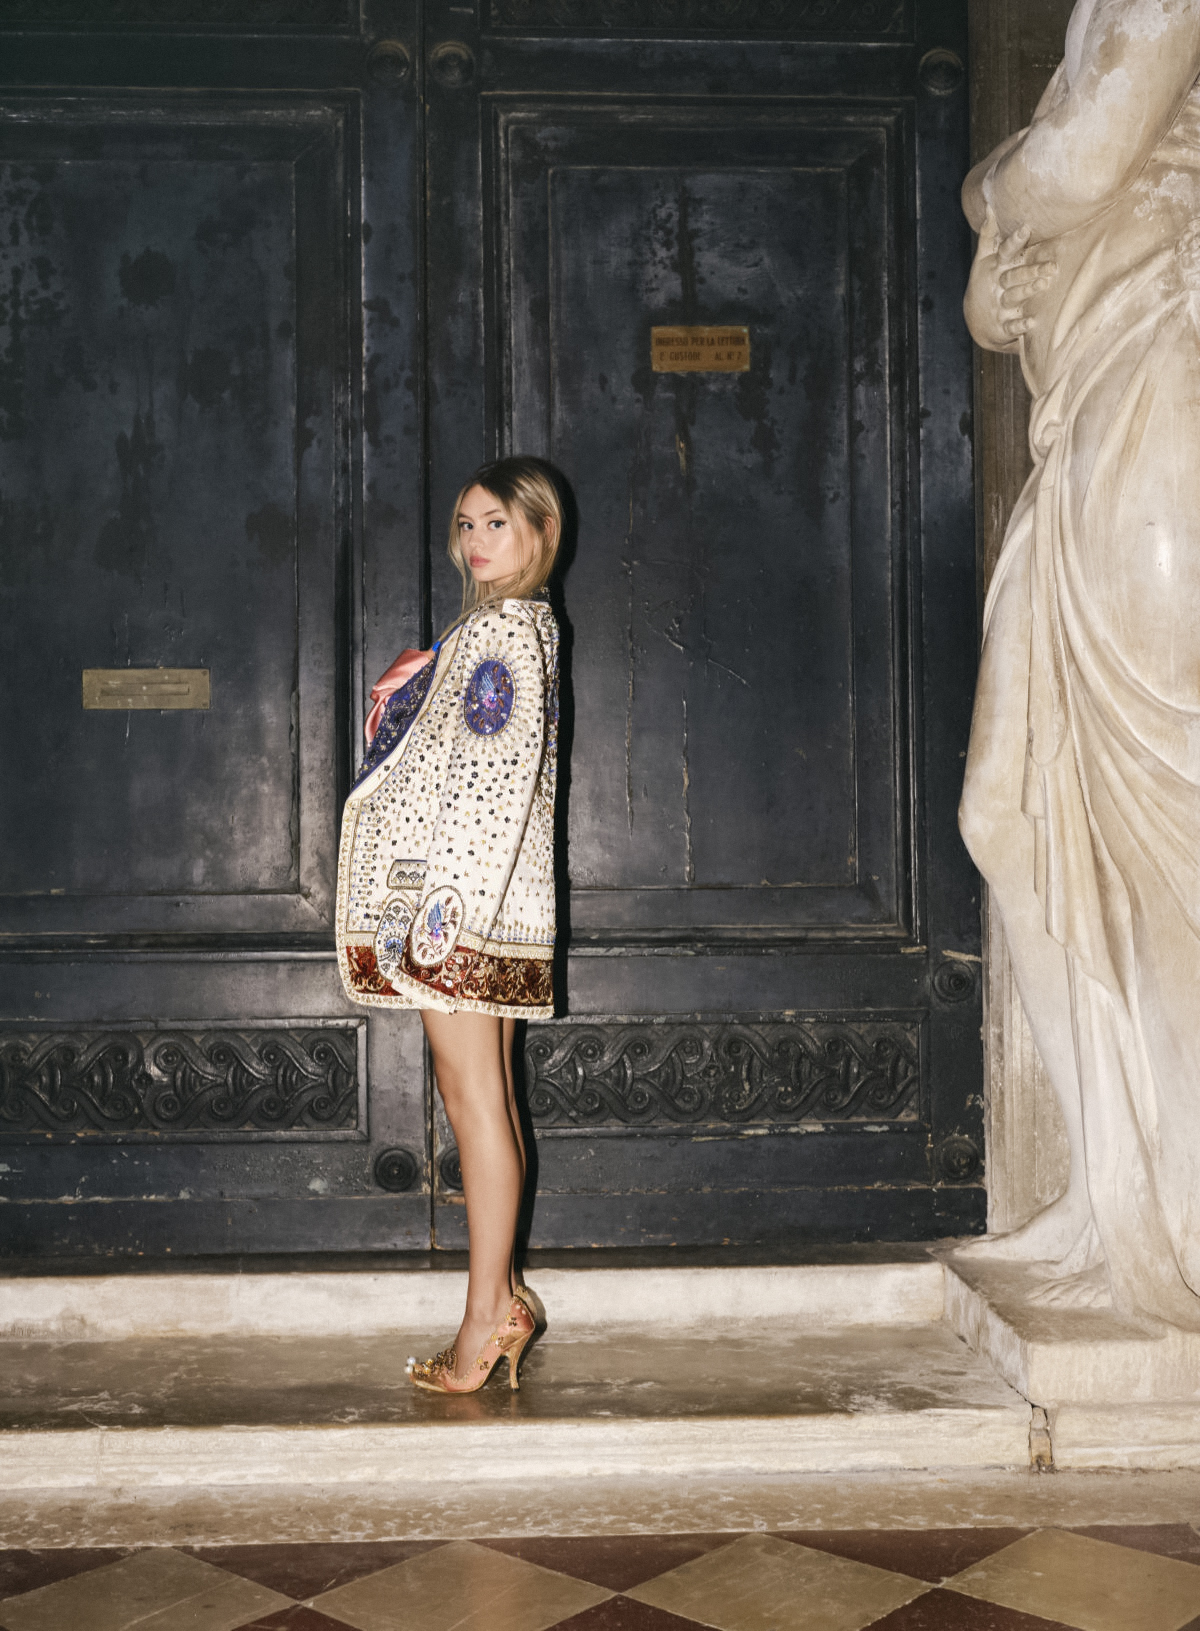 Leni Klum in Dolce & Gabbana Alta Moda on Elle US December 2021/January 2022 by Stefan Armbruster